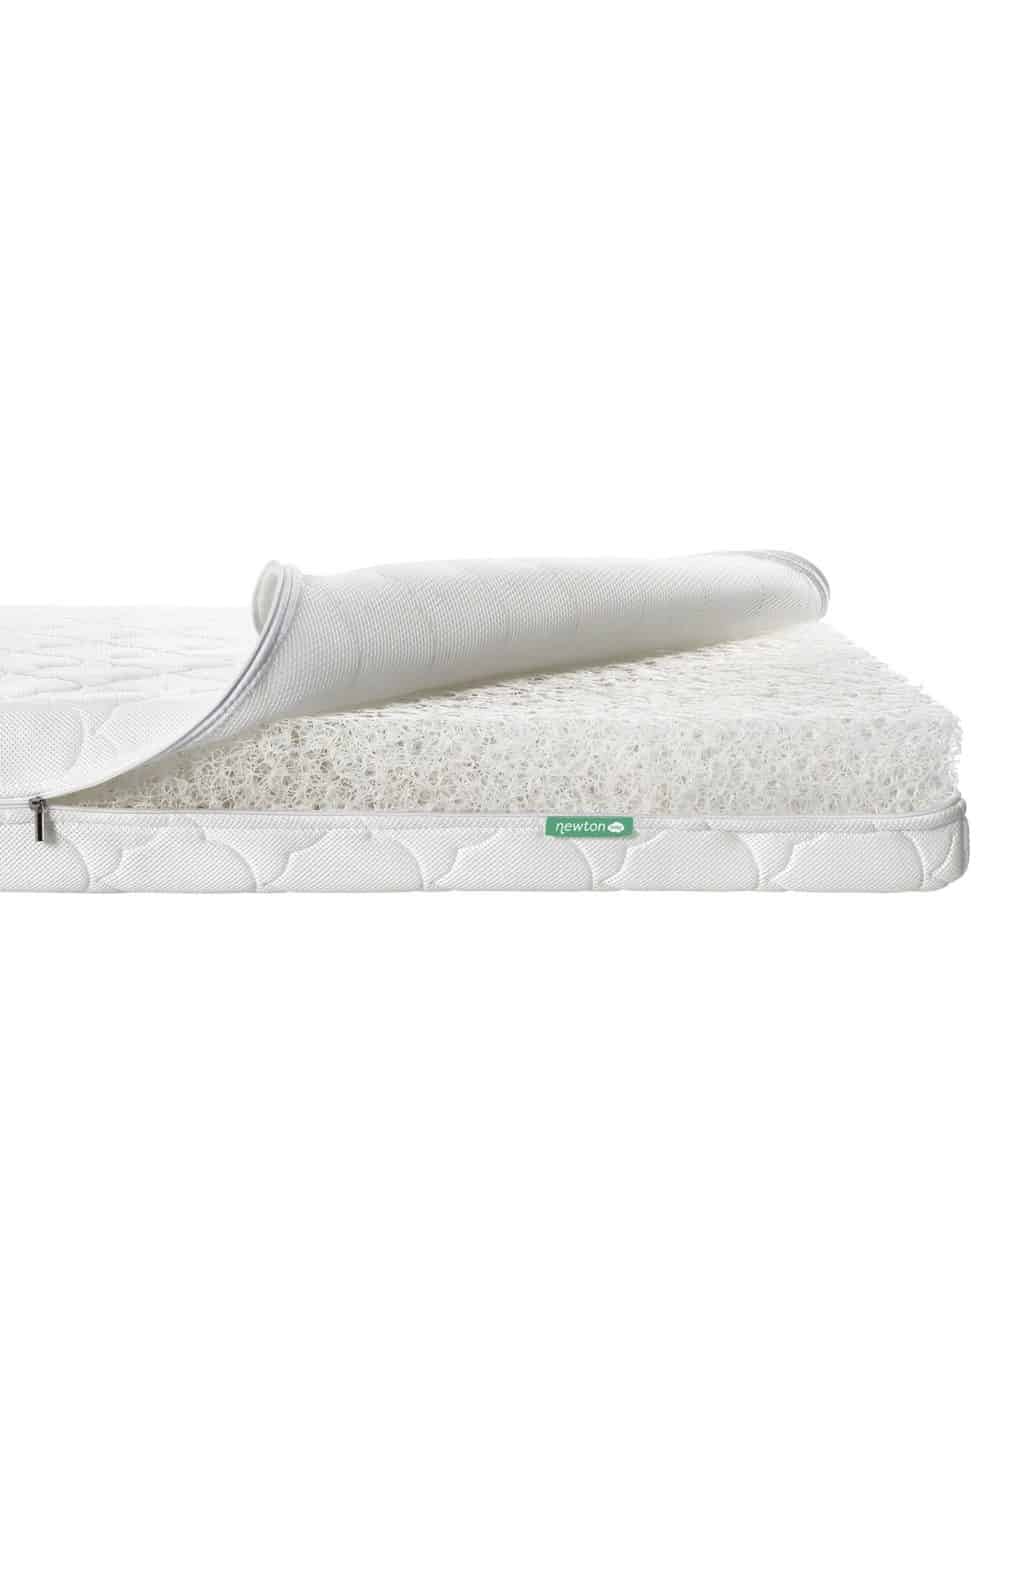 newton mattress